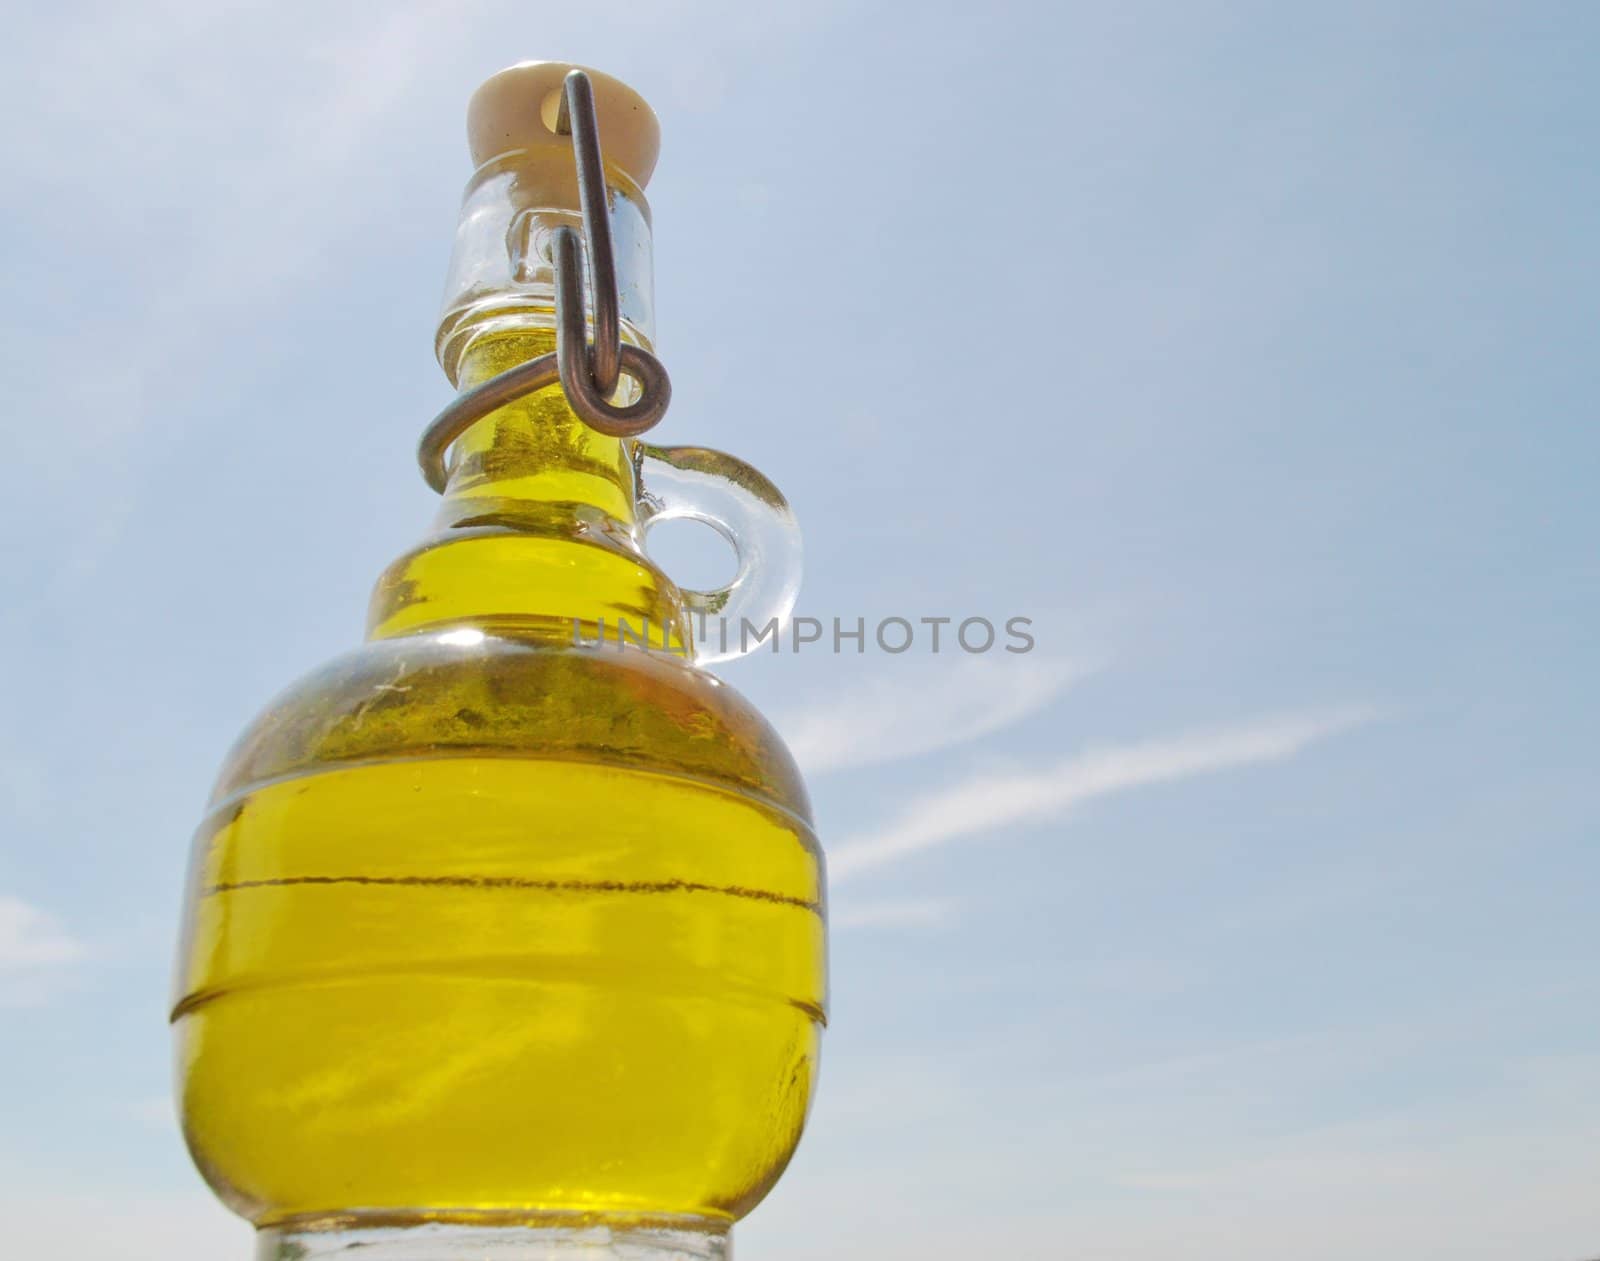 Sky donates a small bottle of italian Olive Oil